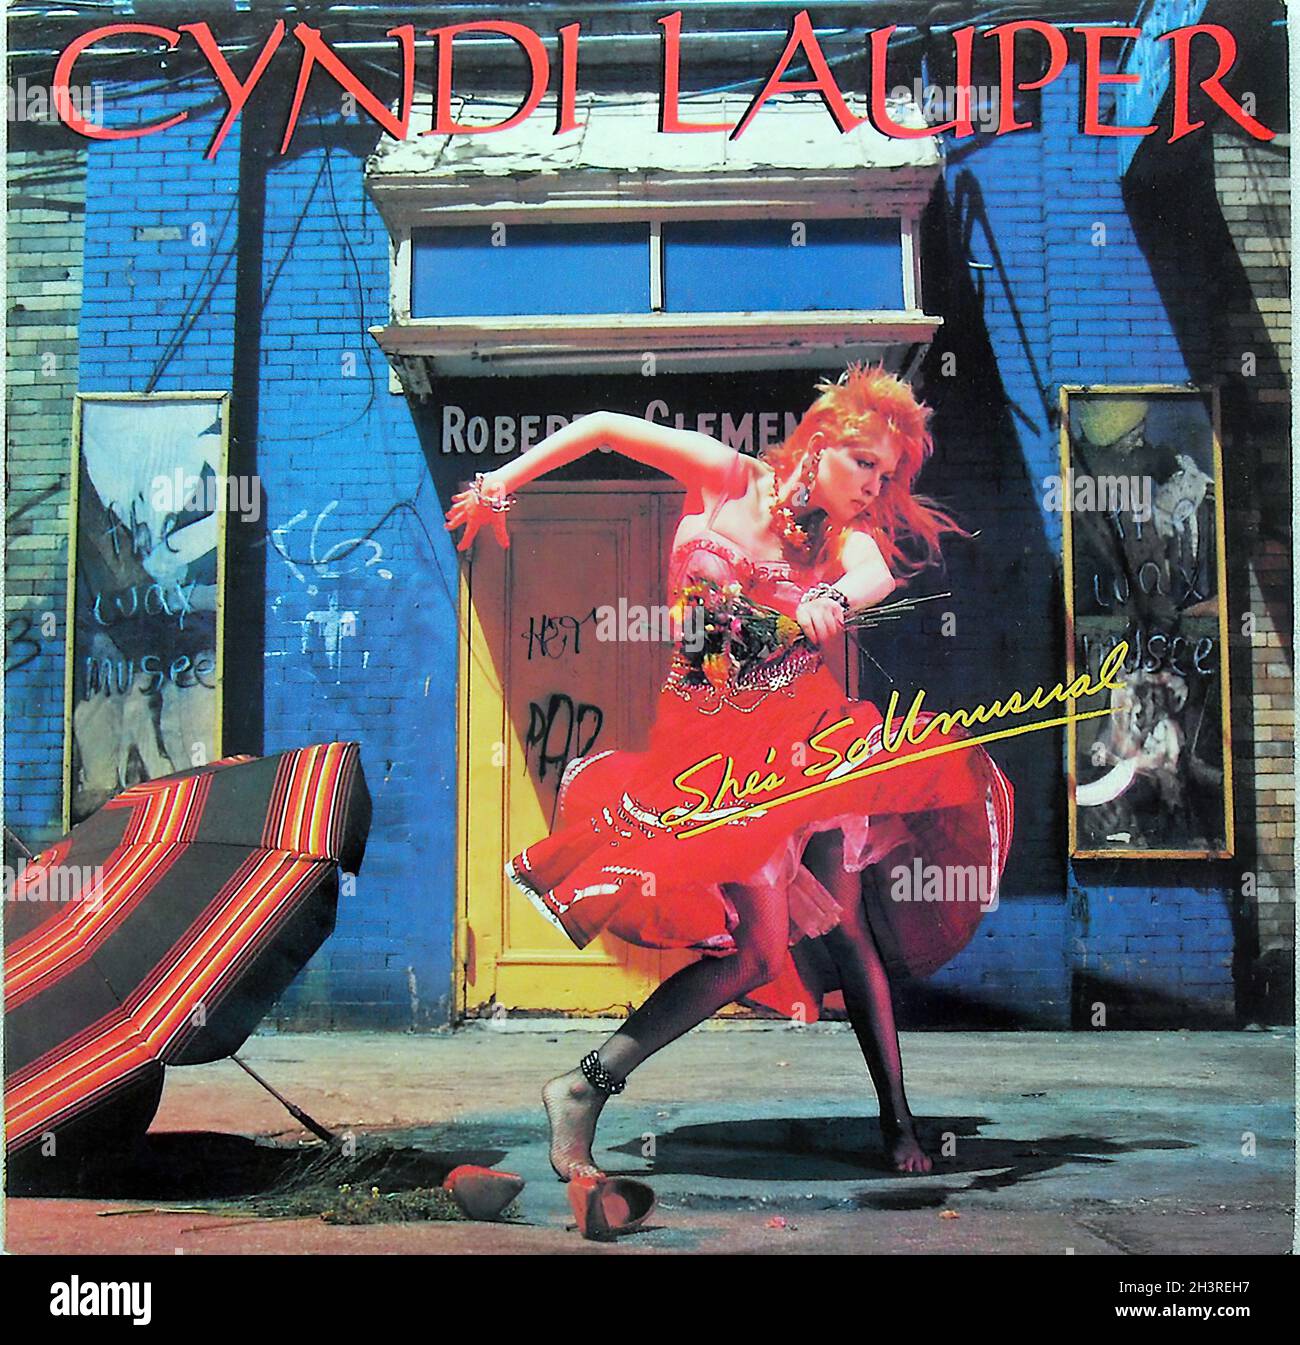 Cyndi Lauper 1983 Shes so Unusual 1980s Lp Record Album Cover Original Vintage Vinyl Sleeve A Stock Photo